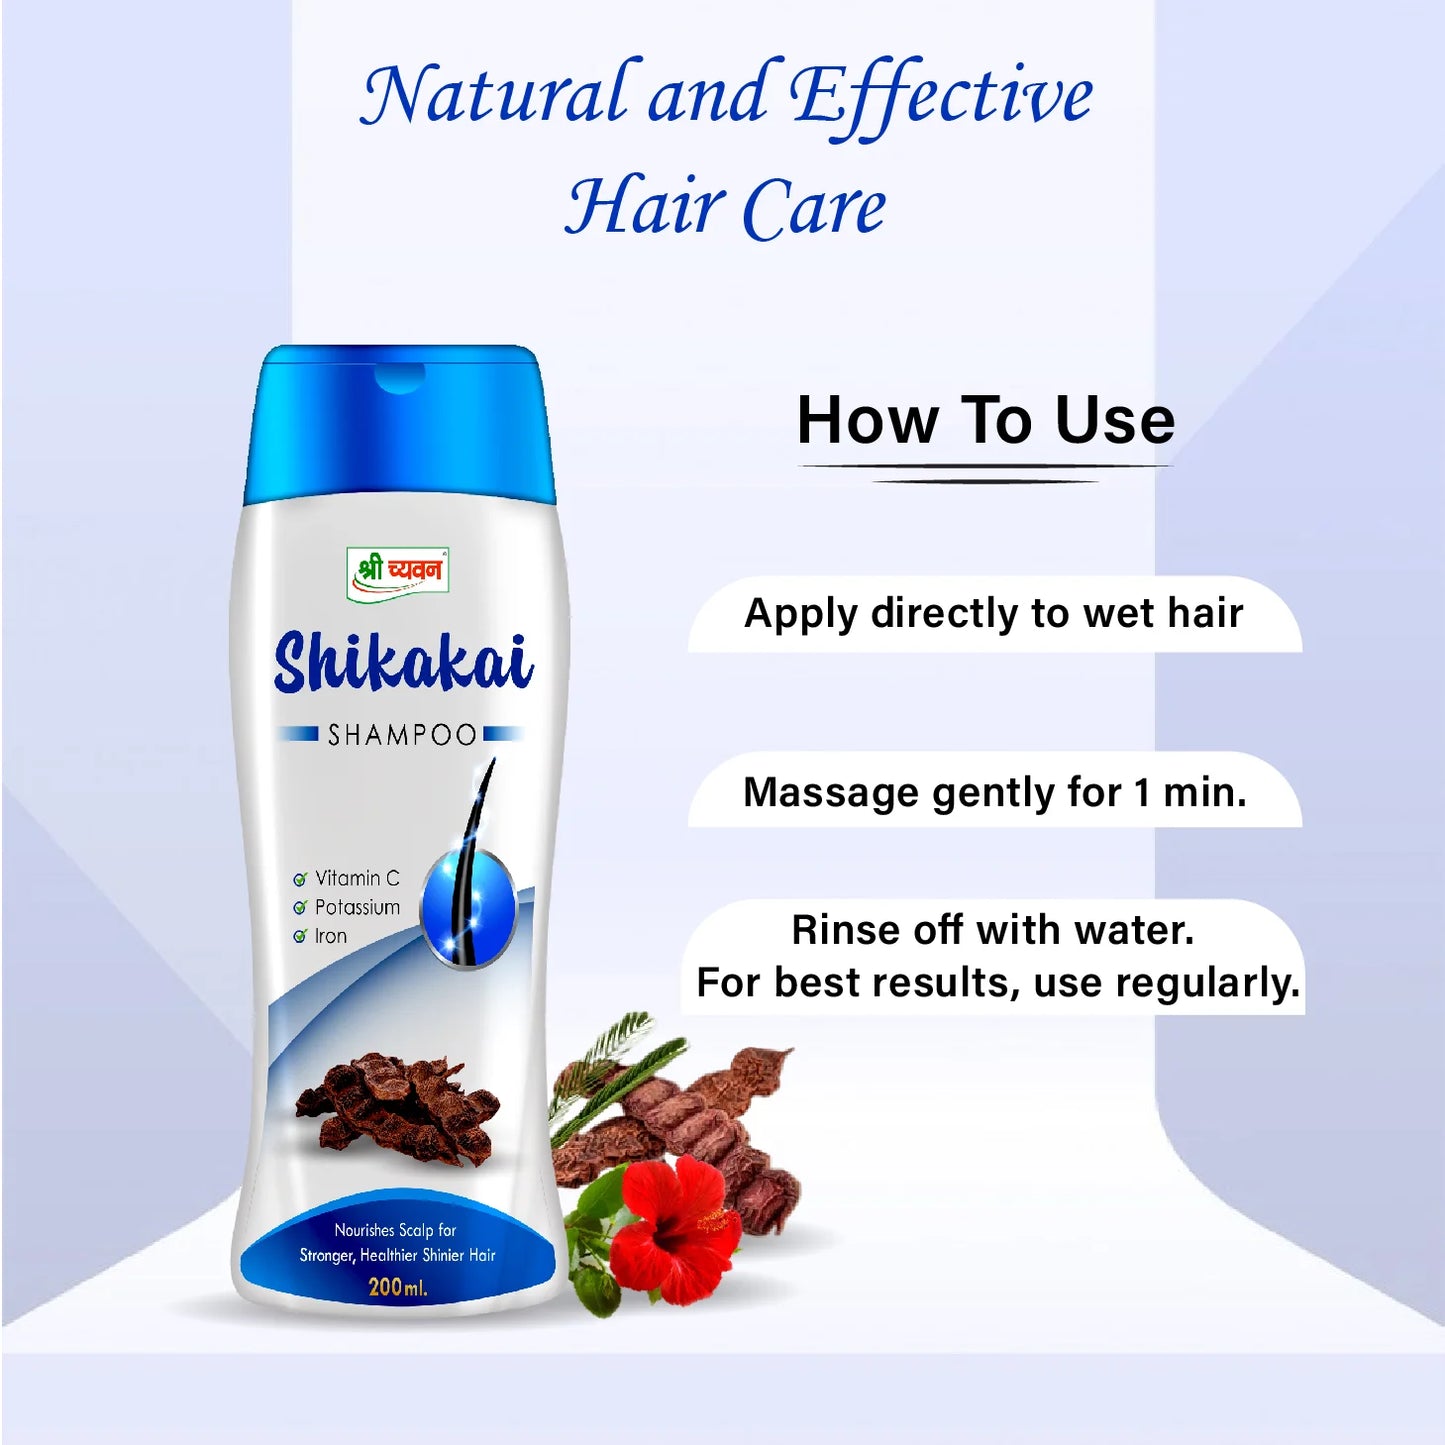 Shikakai shampoo uses